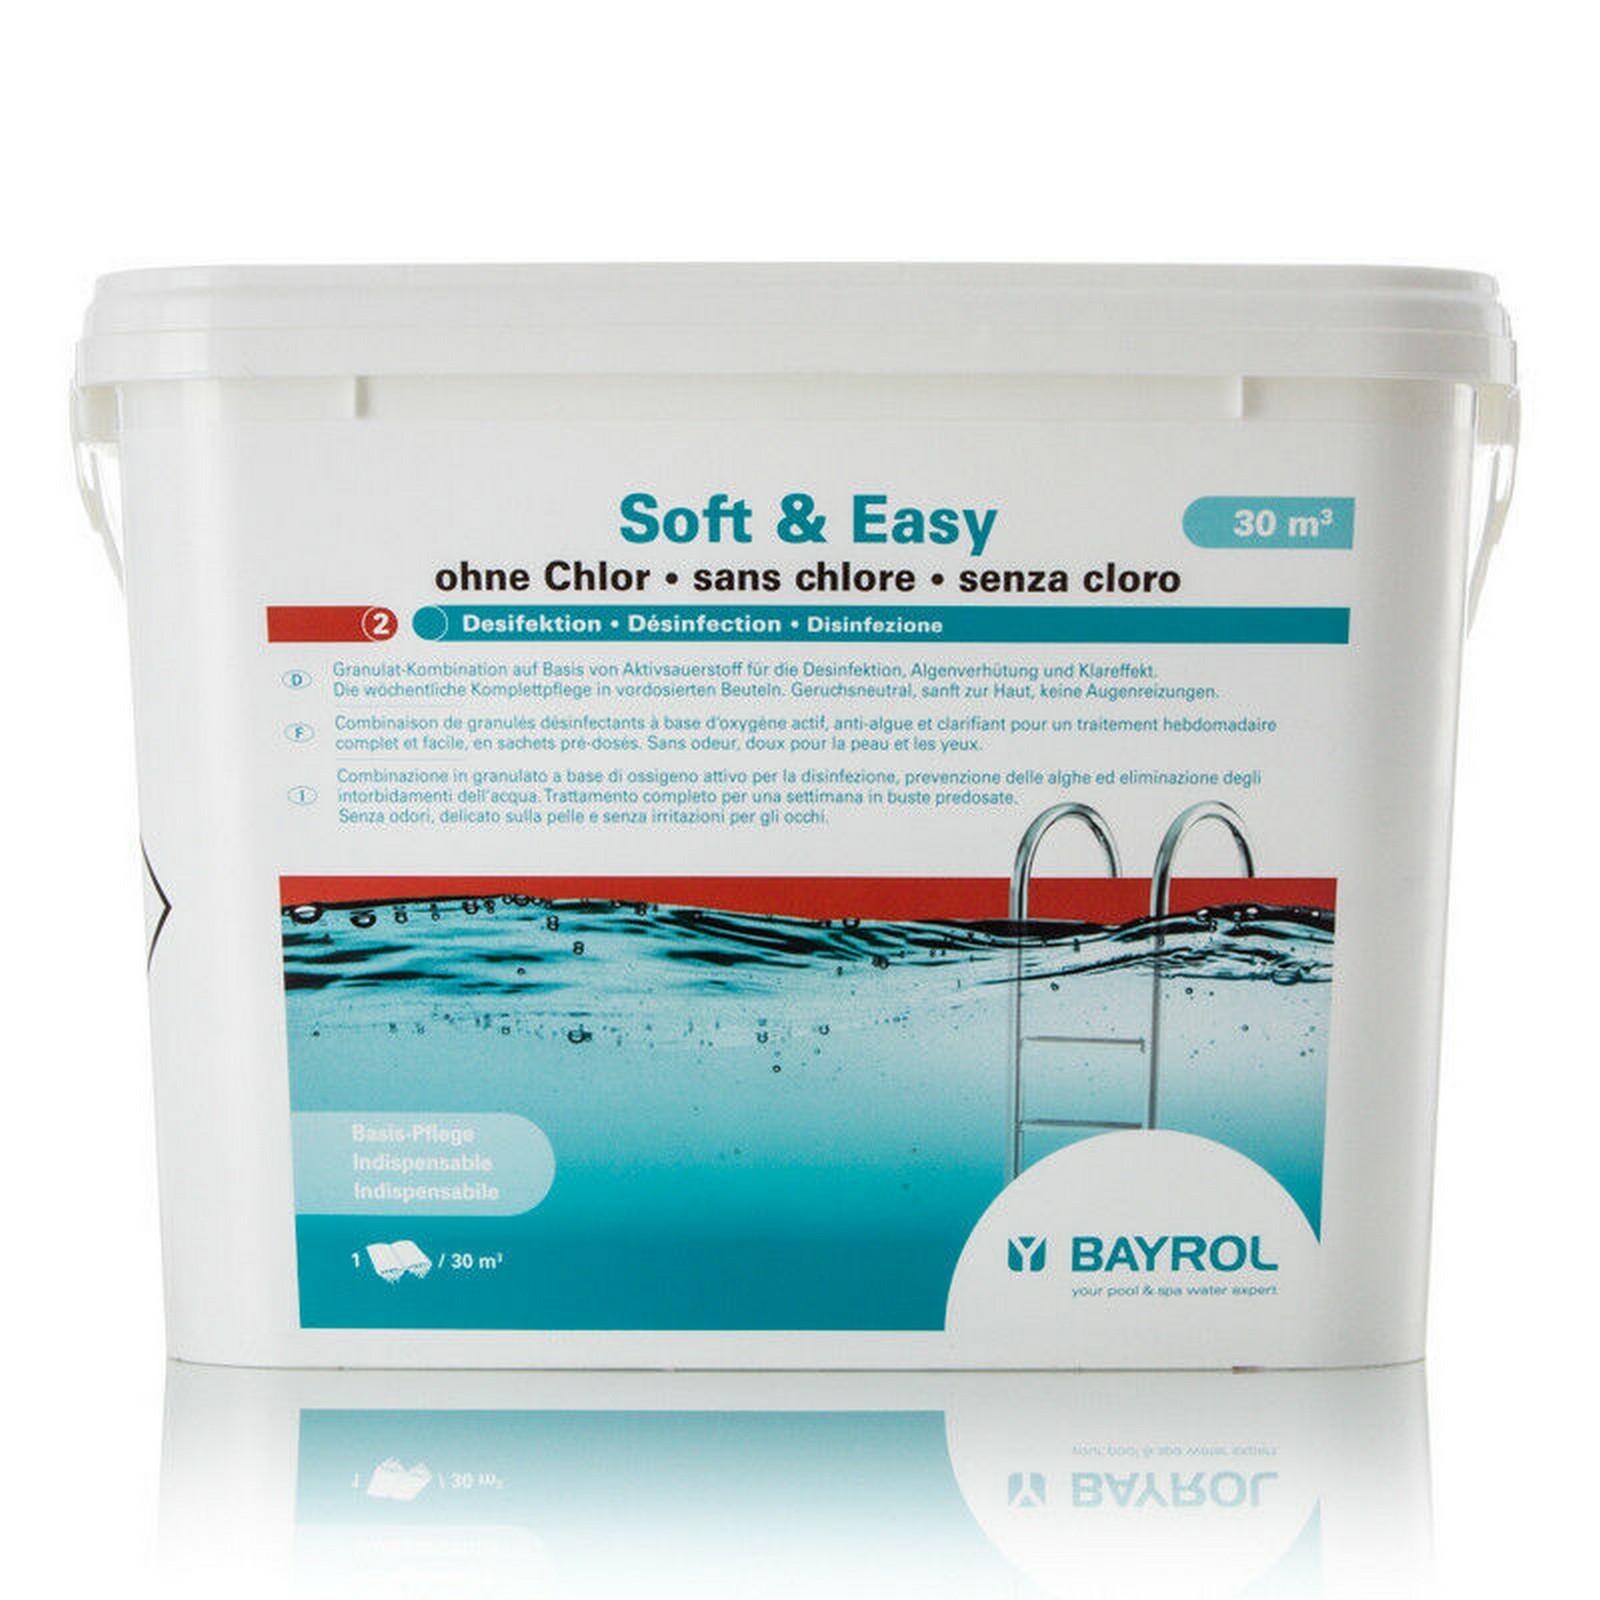 Найз энд изи. Bayrol софт энд ИЗИ 5,04 кг. Софт энд ИЗИ 4,48 кг. Bayrol Soft and easy химия для бассейнов. Софт энд ИЗИ для бассейна.